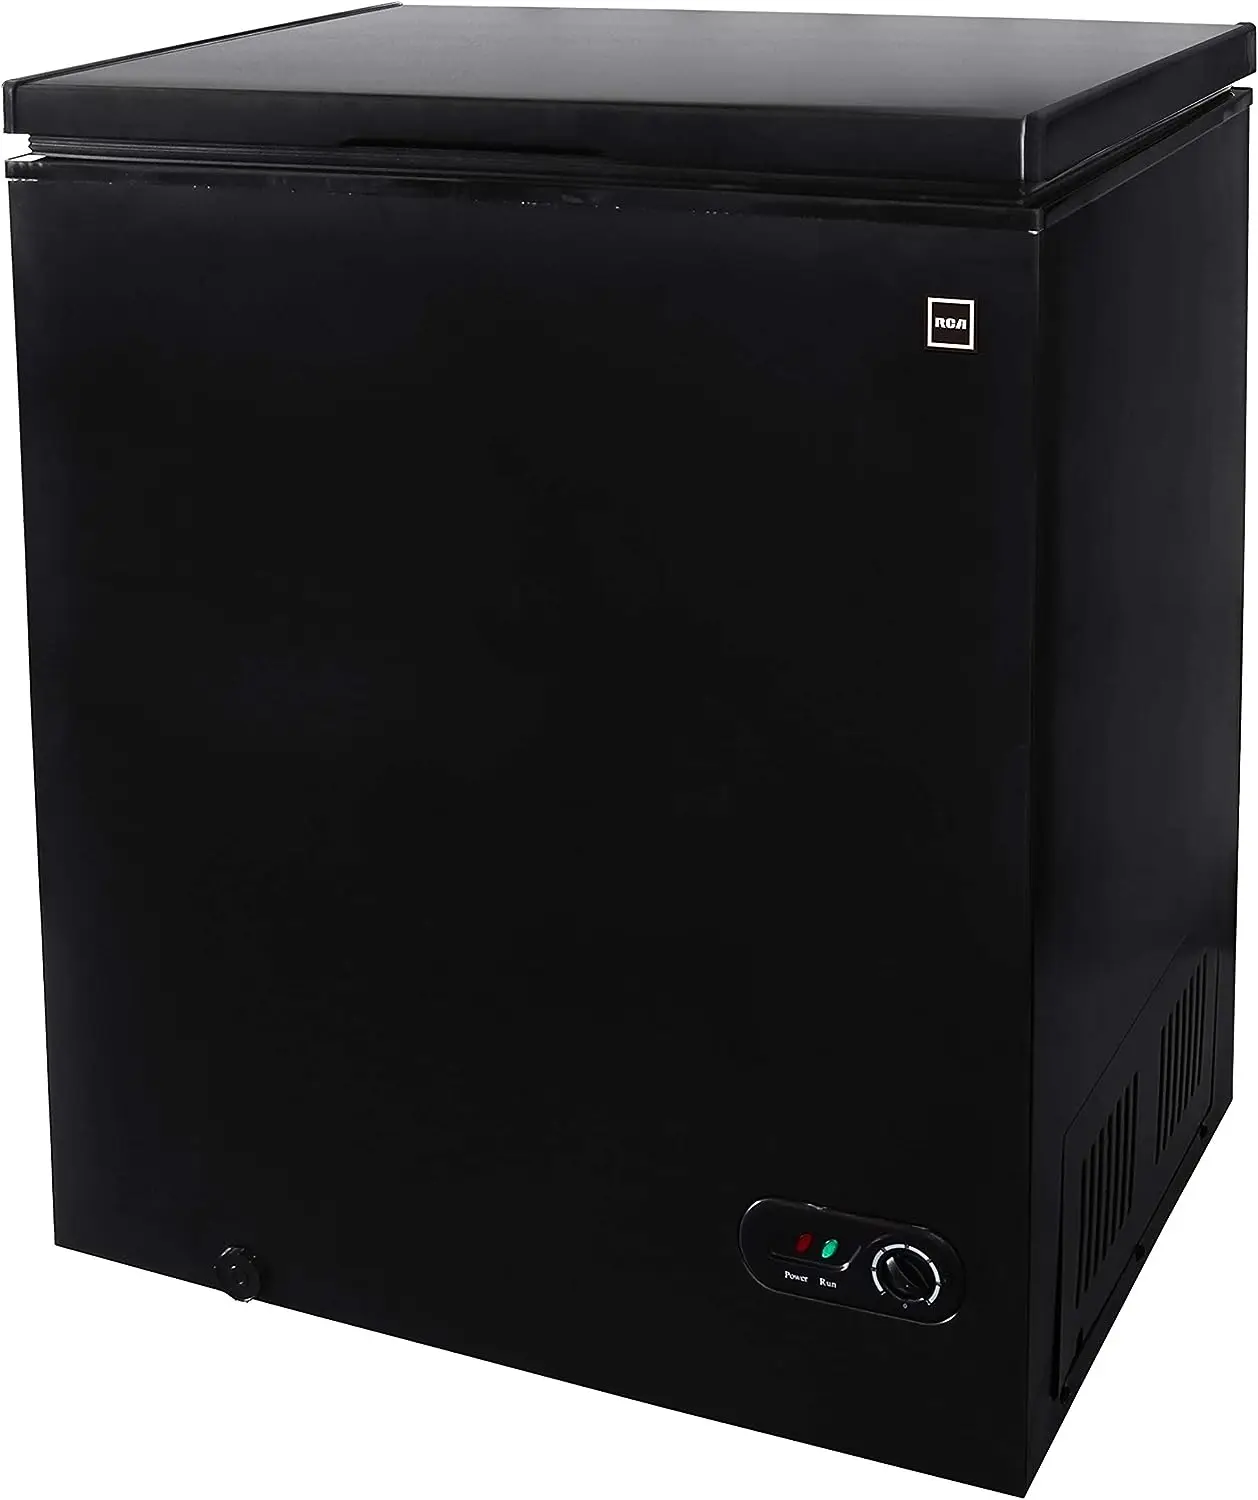 

RFRF510-BLACK Chest Freezer, Up to 141 L, 5.3 Cu. Ft. Capacity, Black